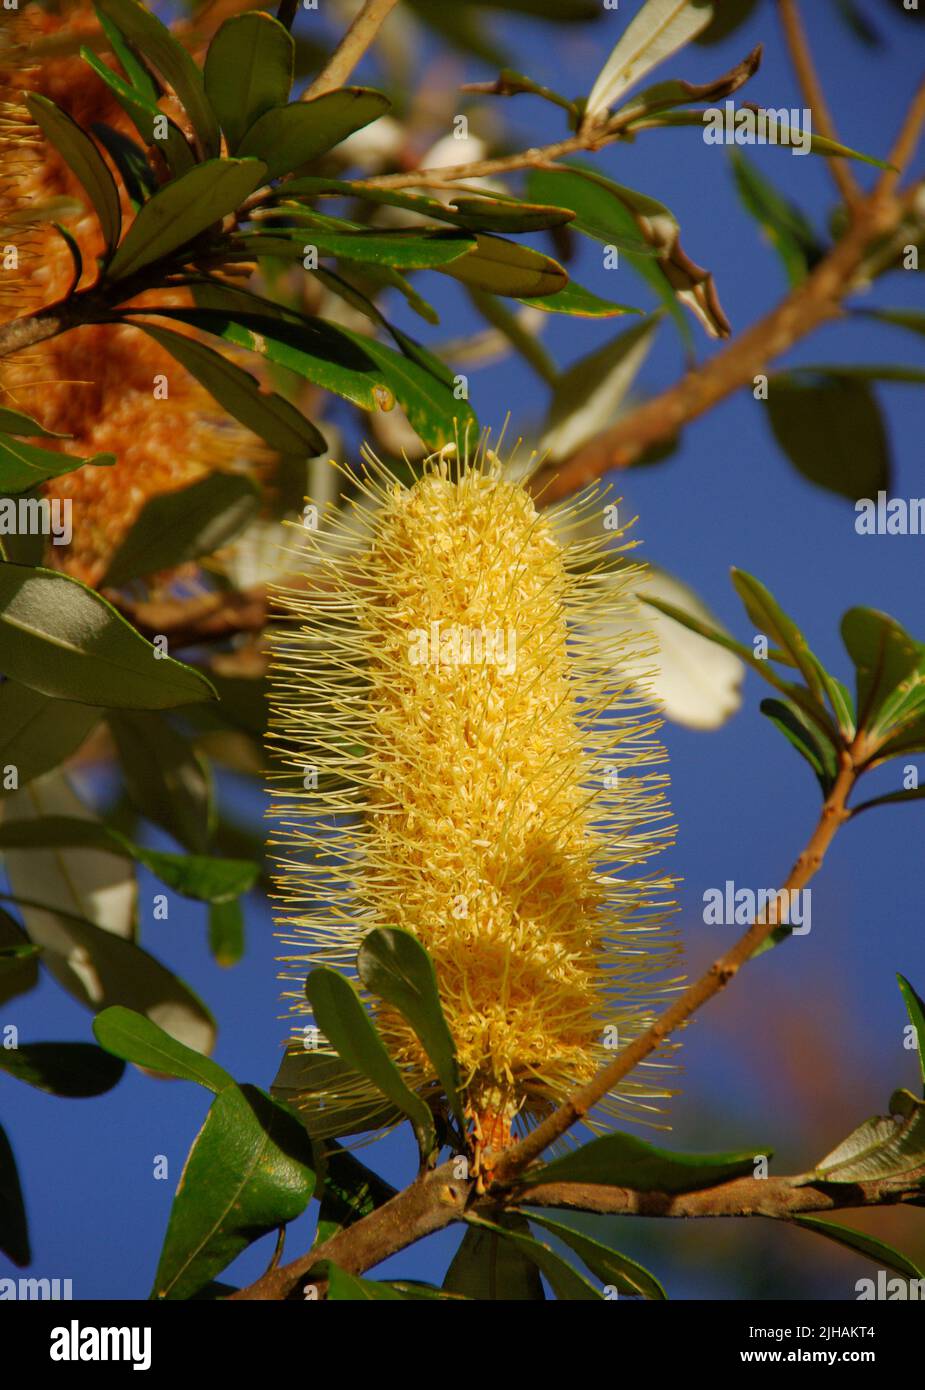 Cylindrical pale yellow flower head of Australian native Coastal Banksia tree, Banksia integrifolia. Autumn sunshine in Queensland garden. Stock Photo